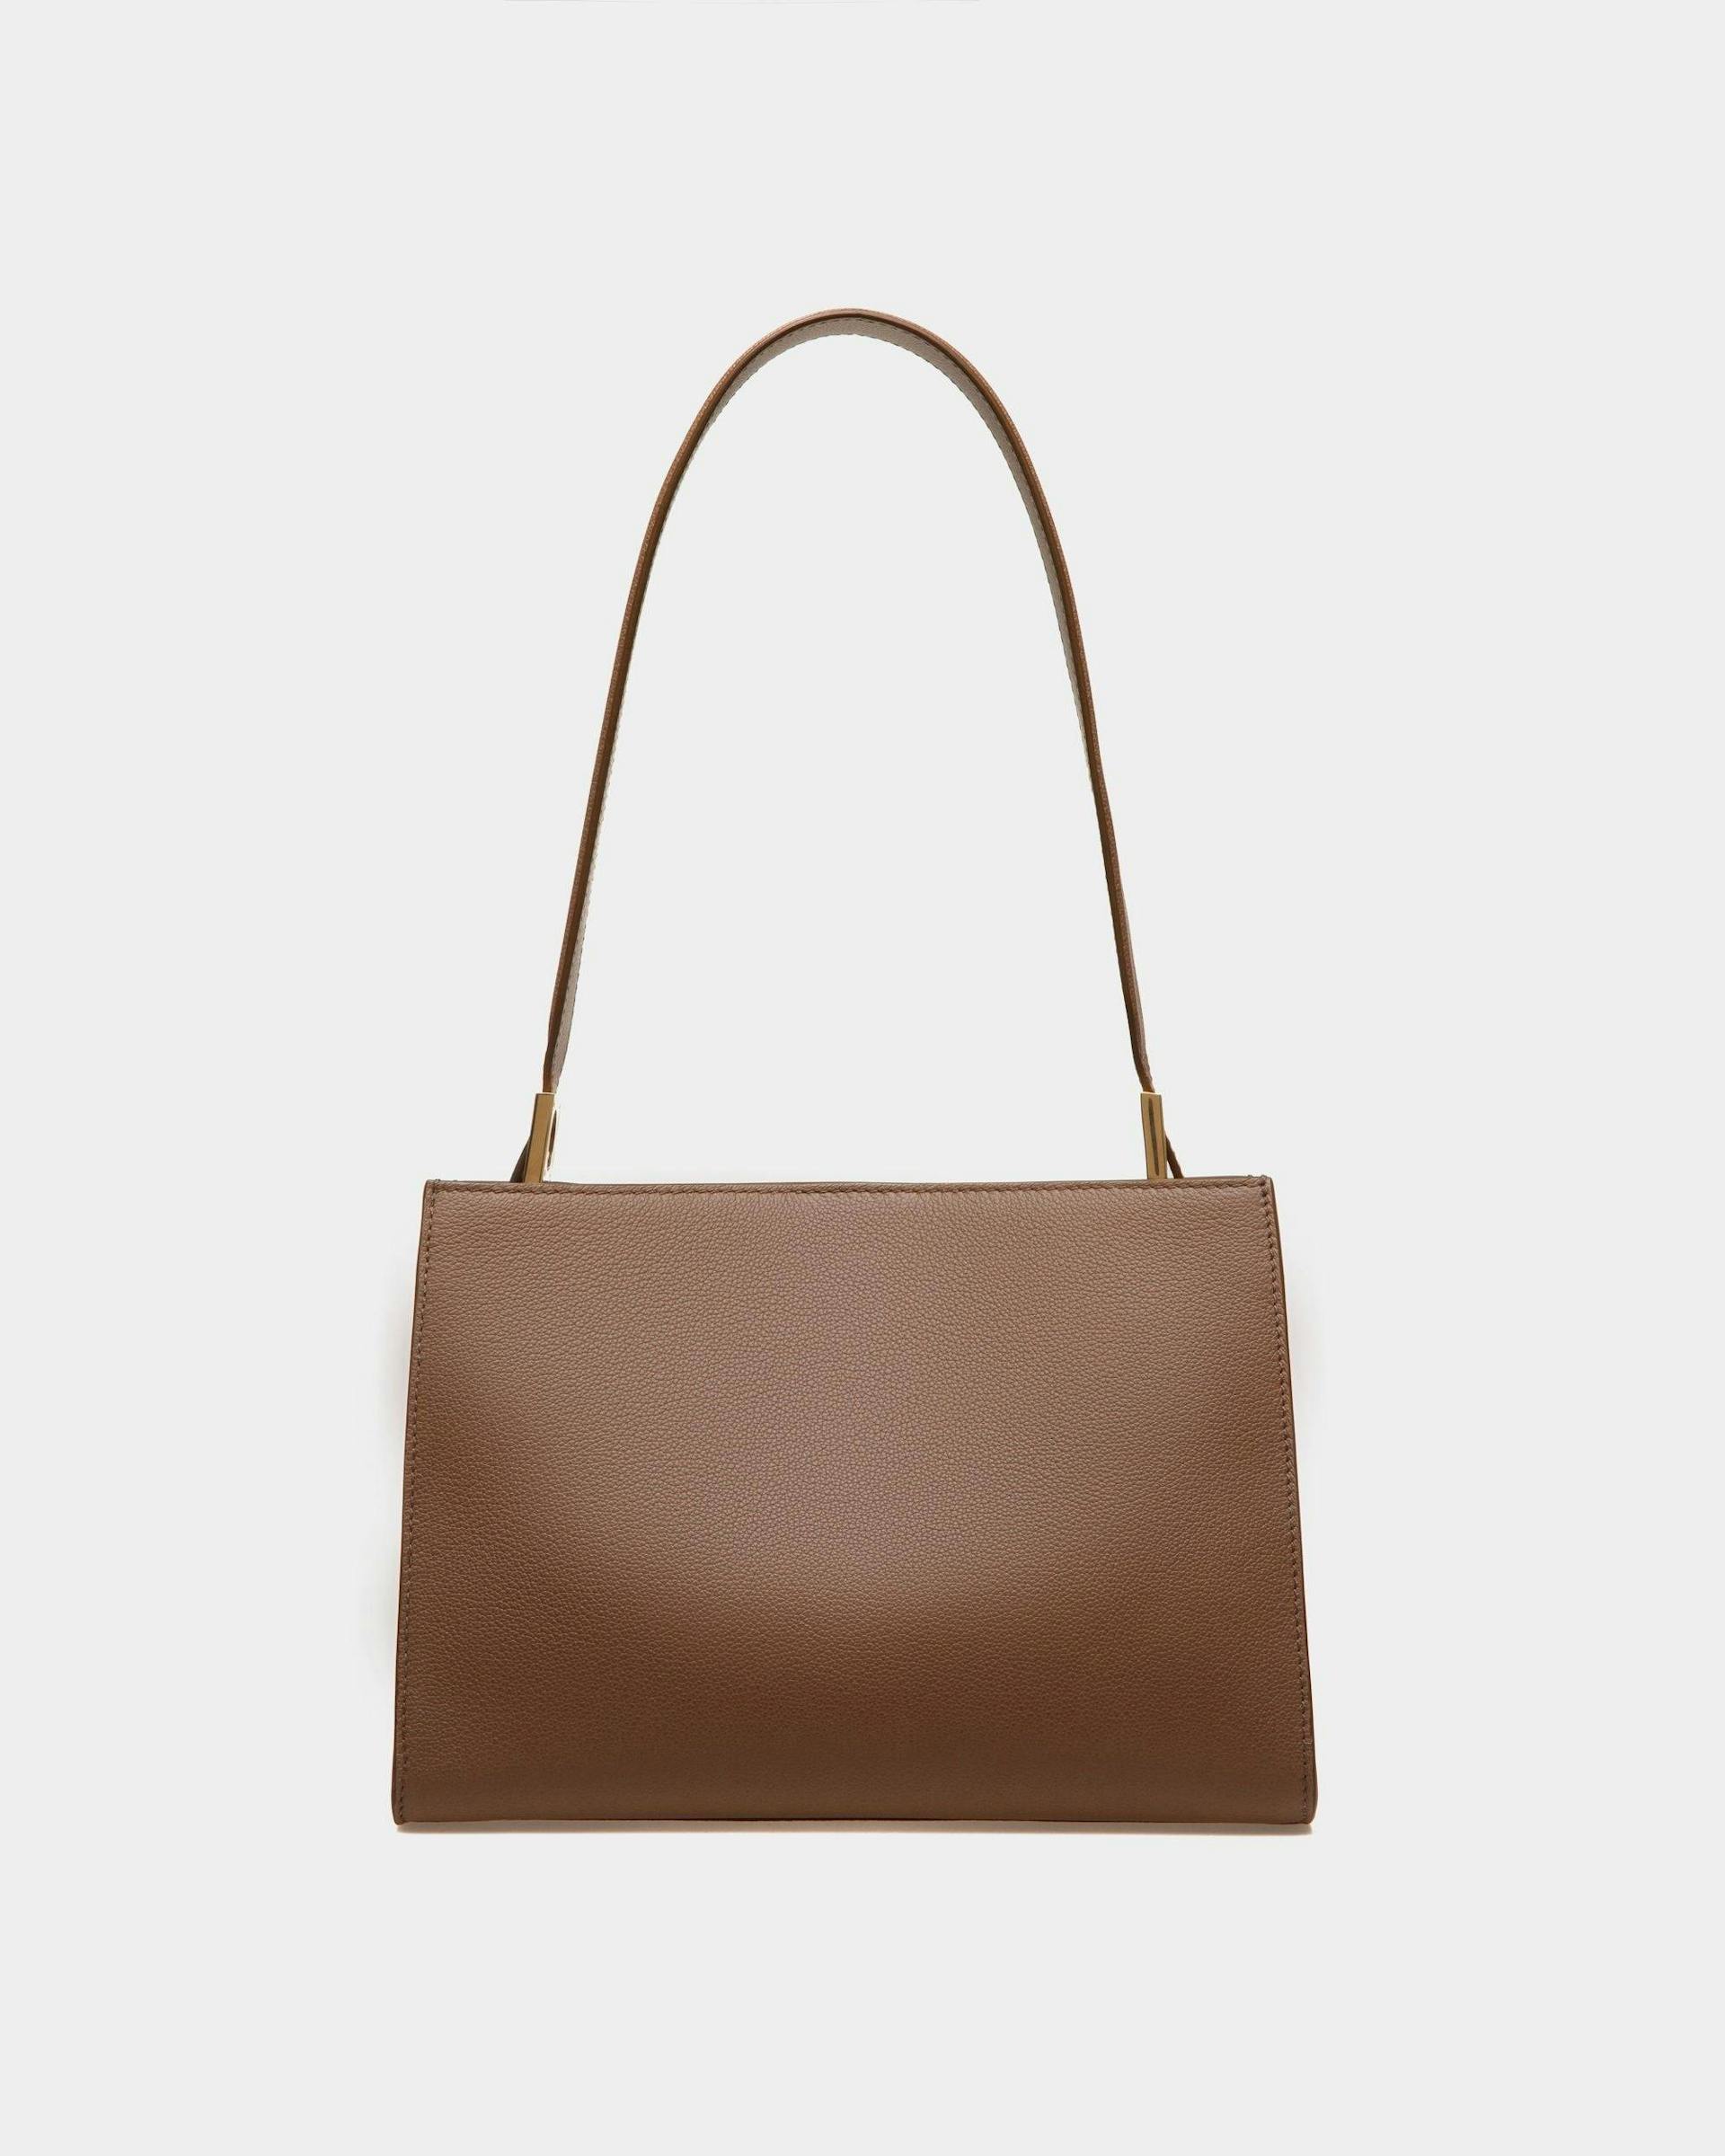 Women's Emblem Shoulder Bag in Brown Grained Leather | Bally | Still Life Back